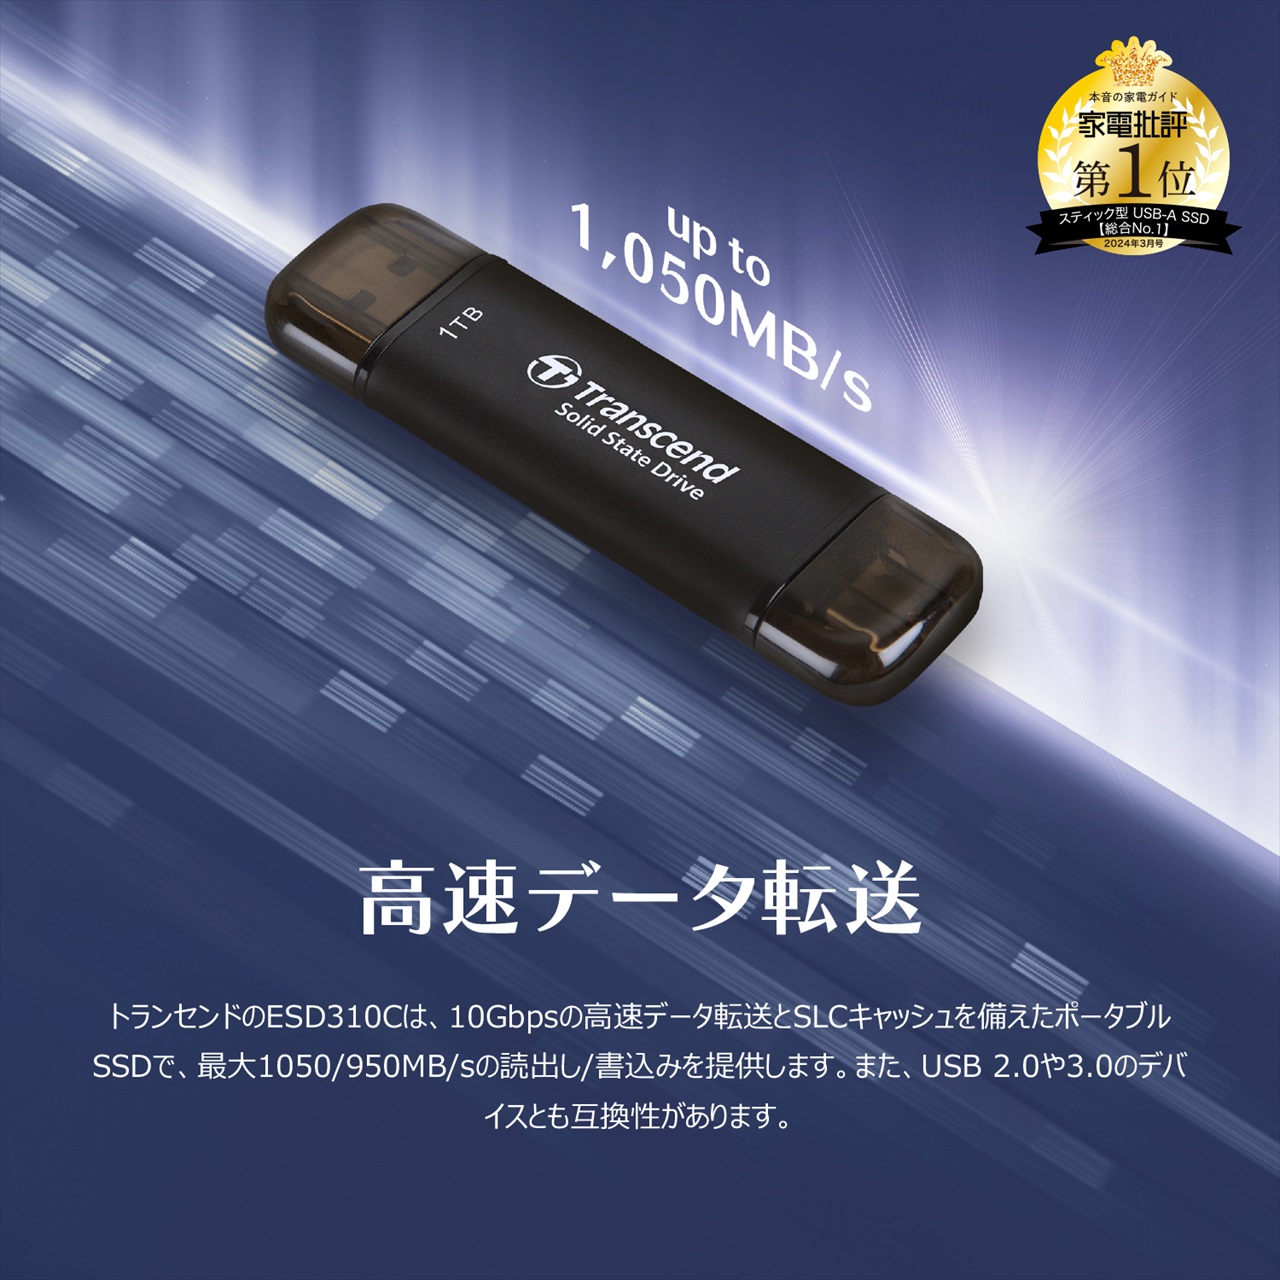 Transcend スティックSSD 512GB ESD310 ポータブルSSD USB3.2 Gen2